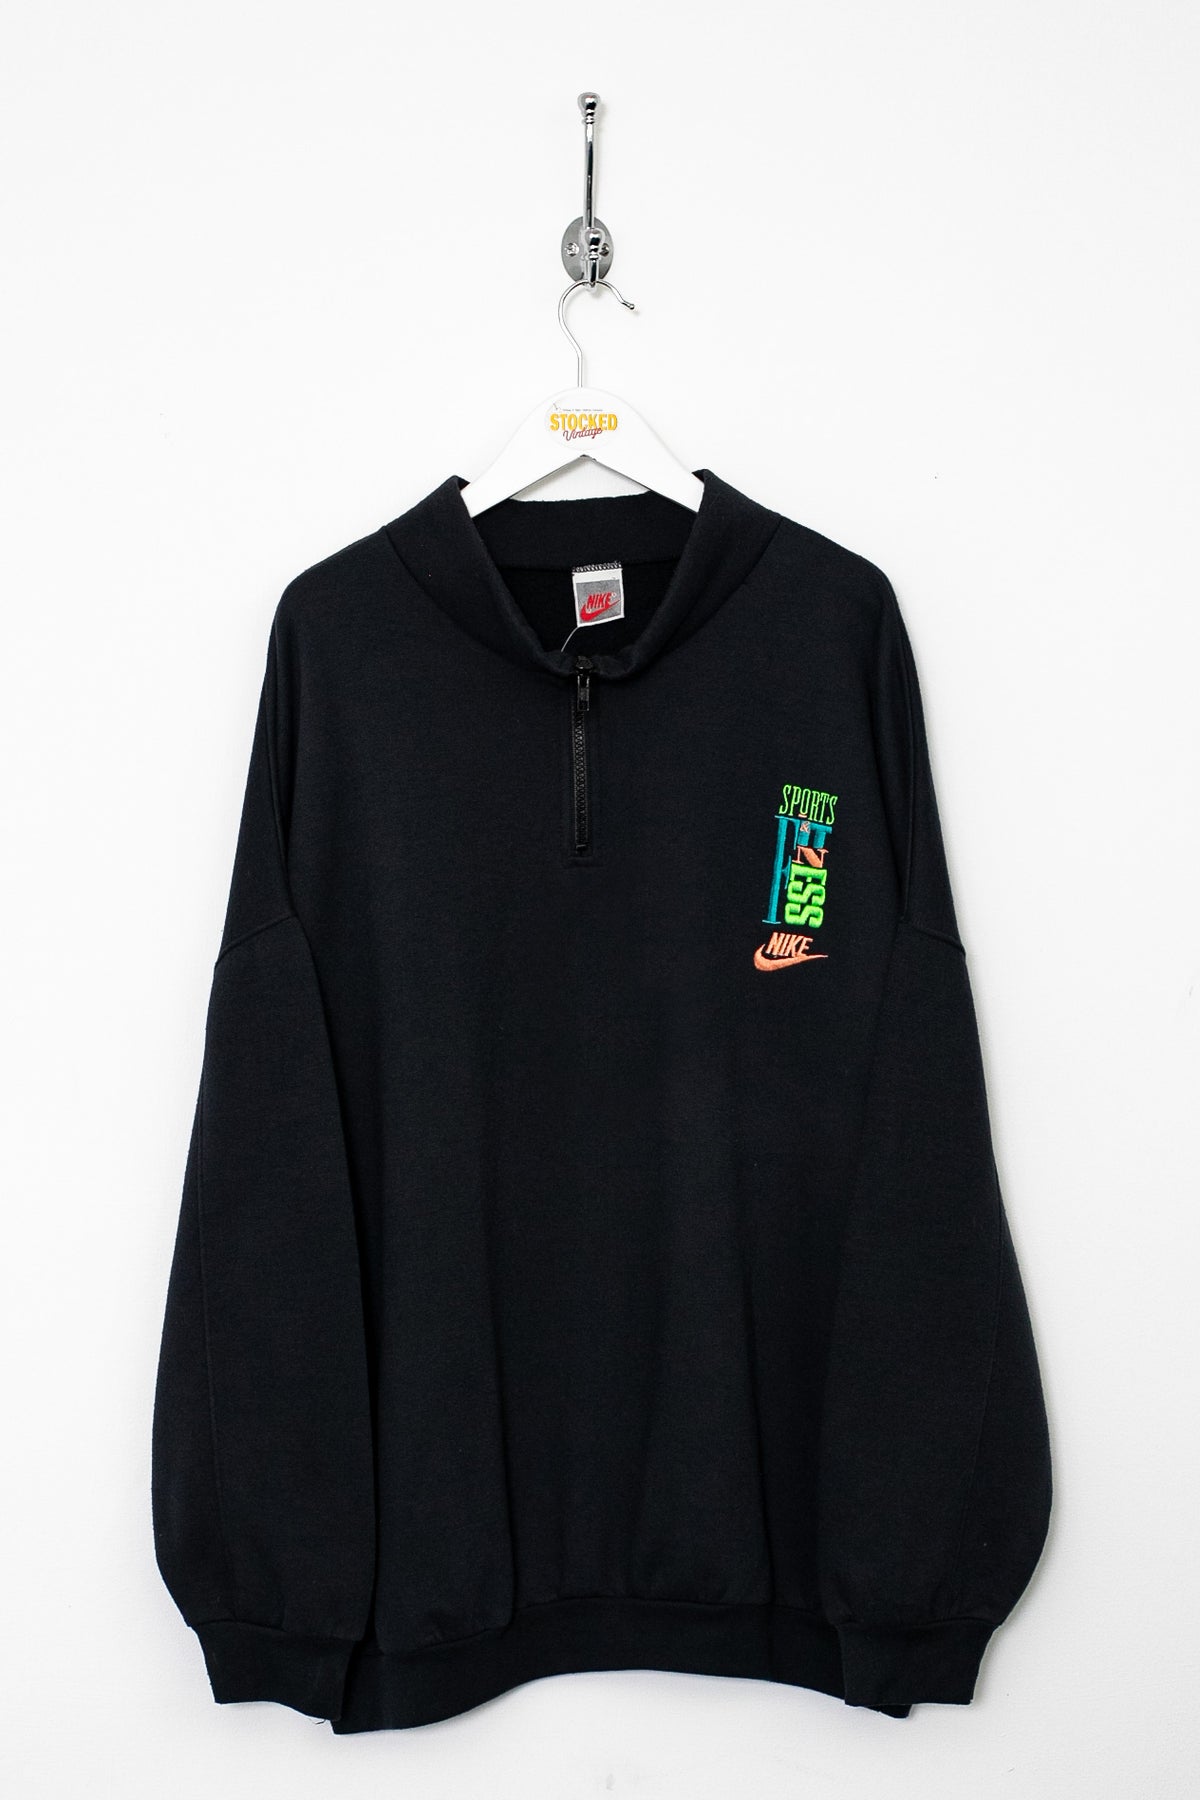 80s Nike 1/4 Zip Sweatshirt (XL)